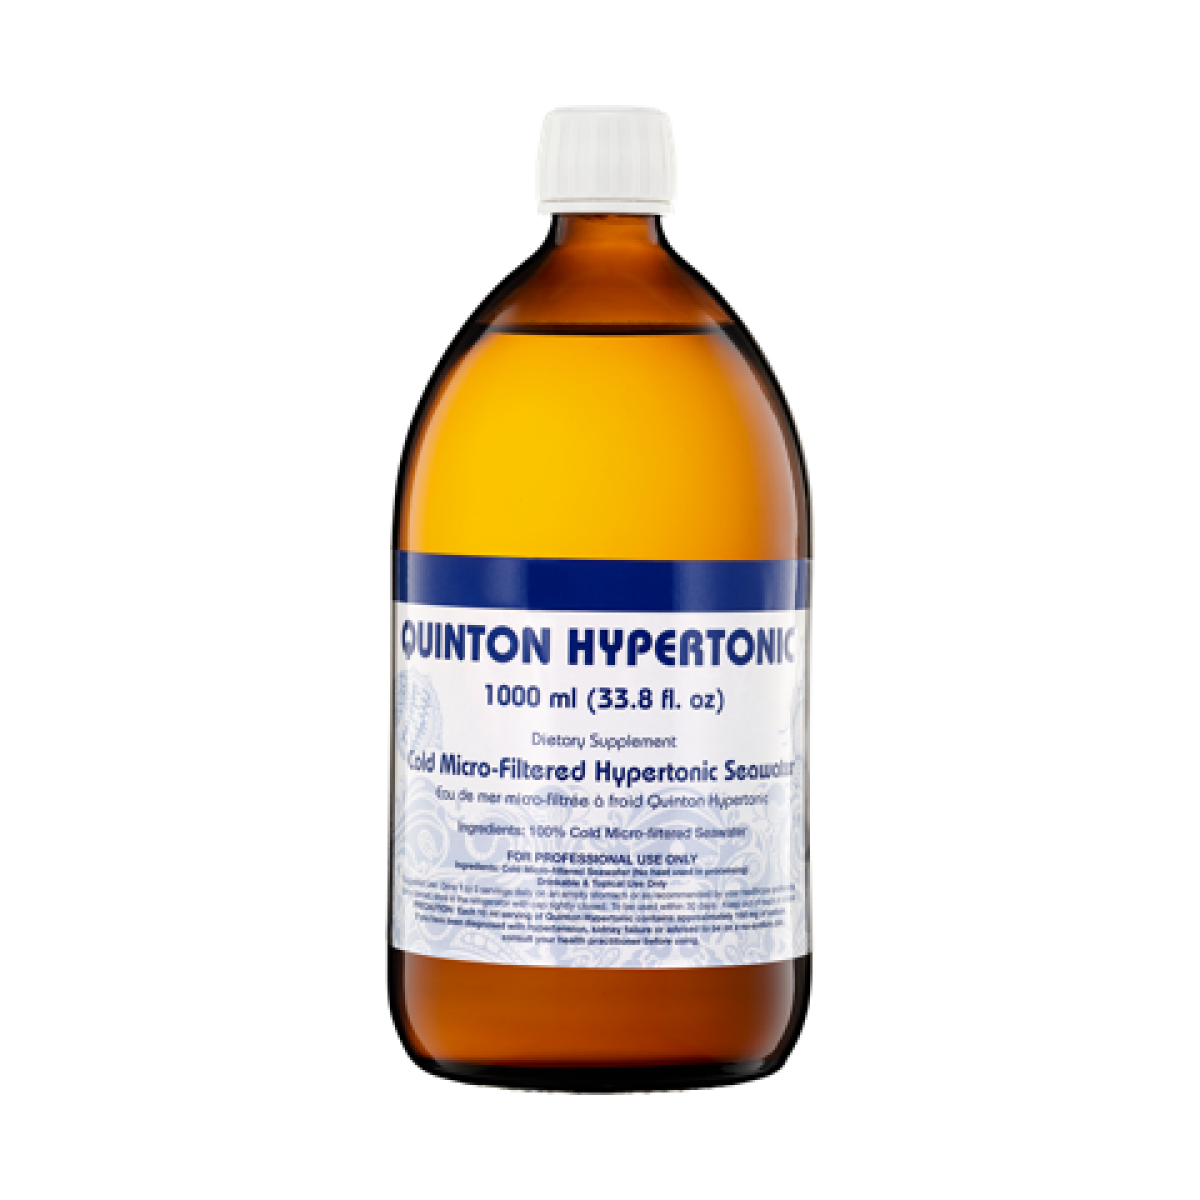 Buy Quinton Hypertonic Water in phials on Kazidomi